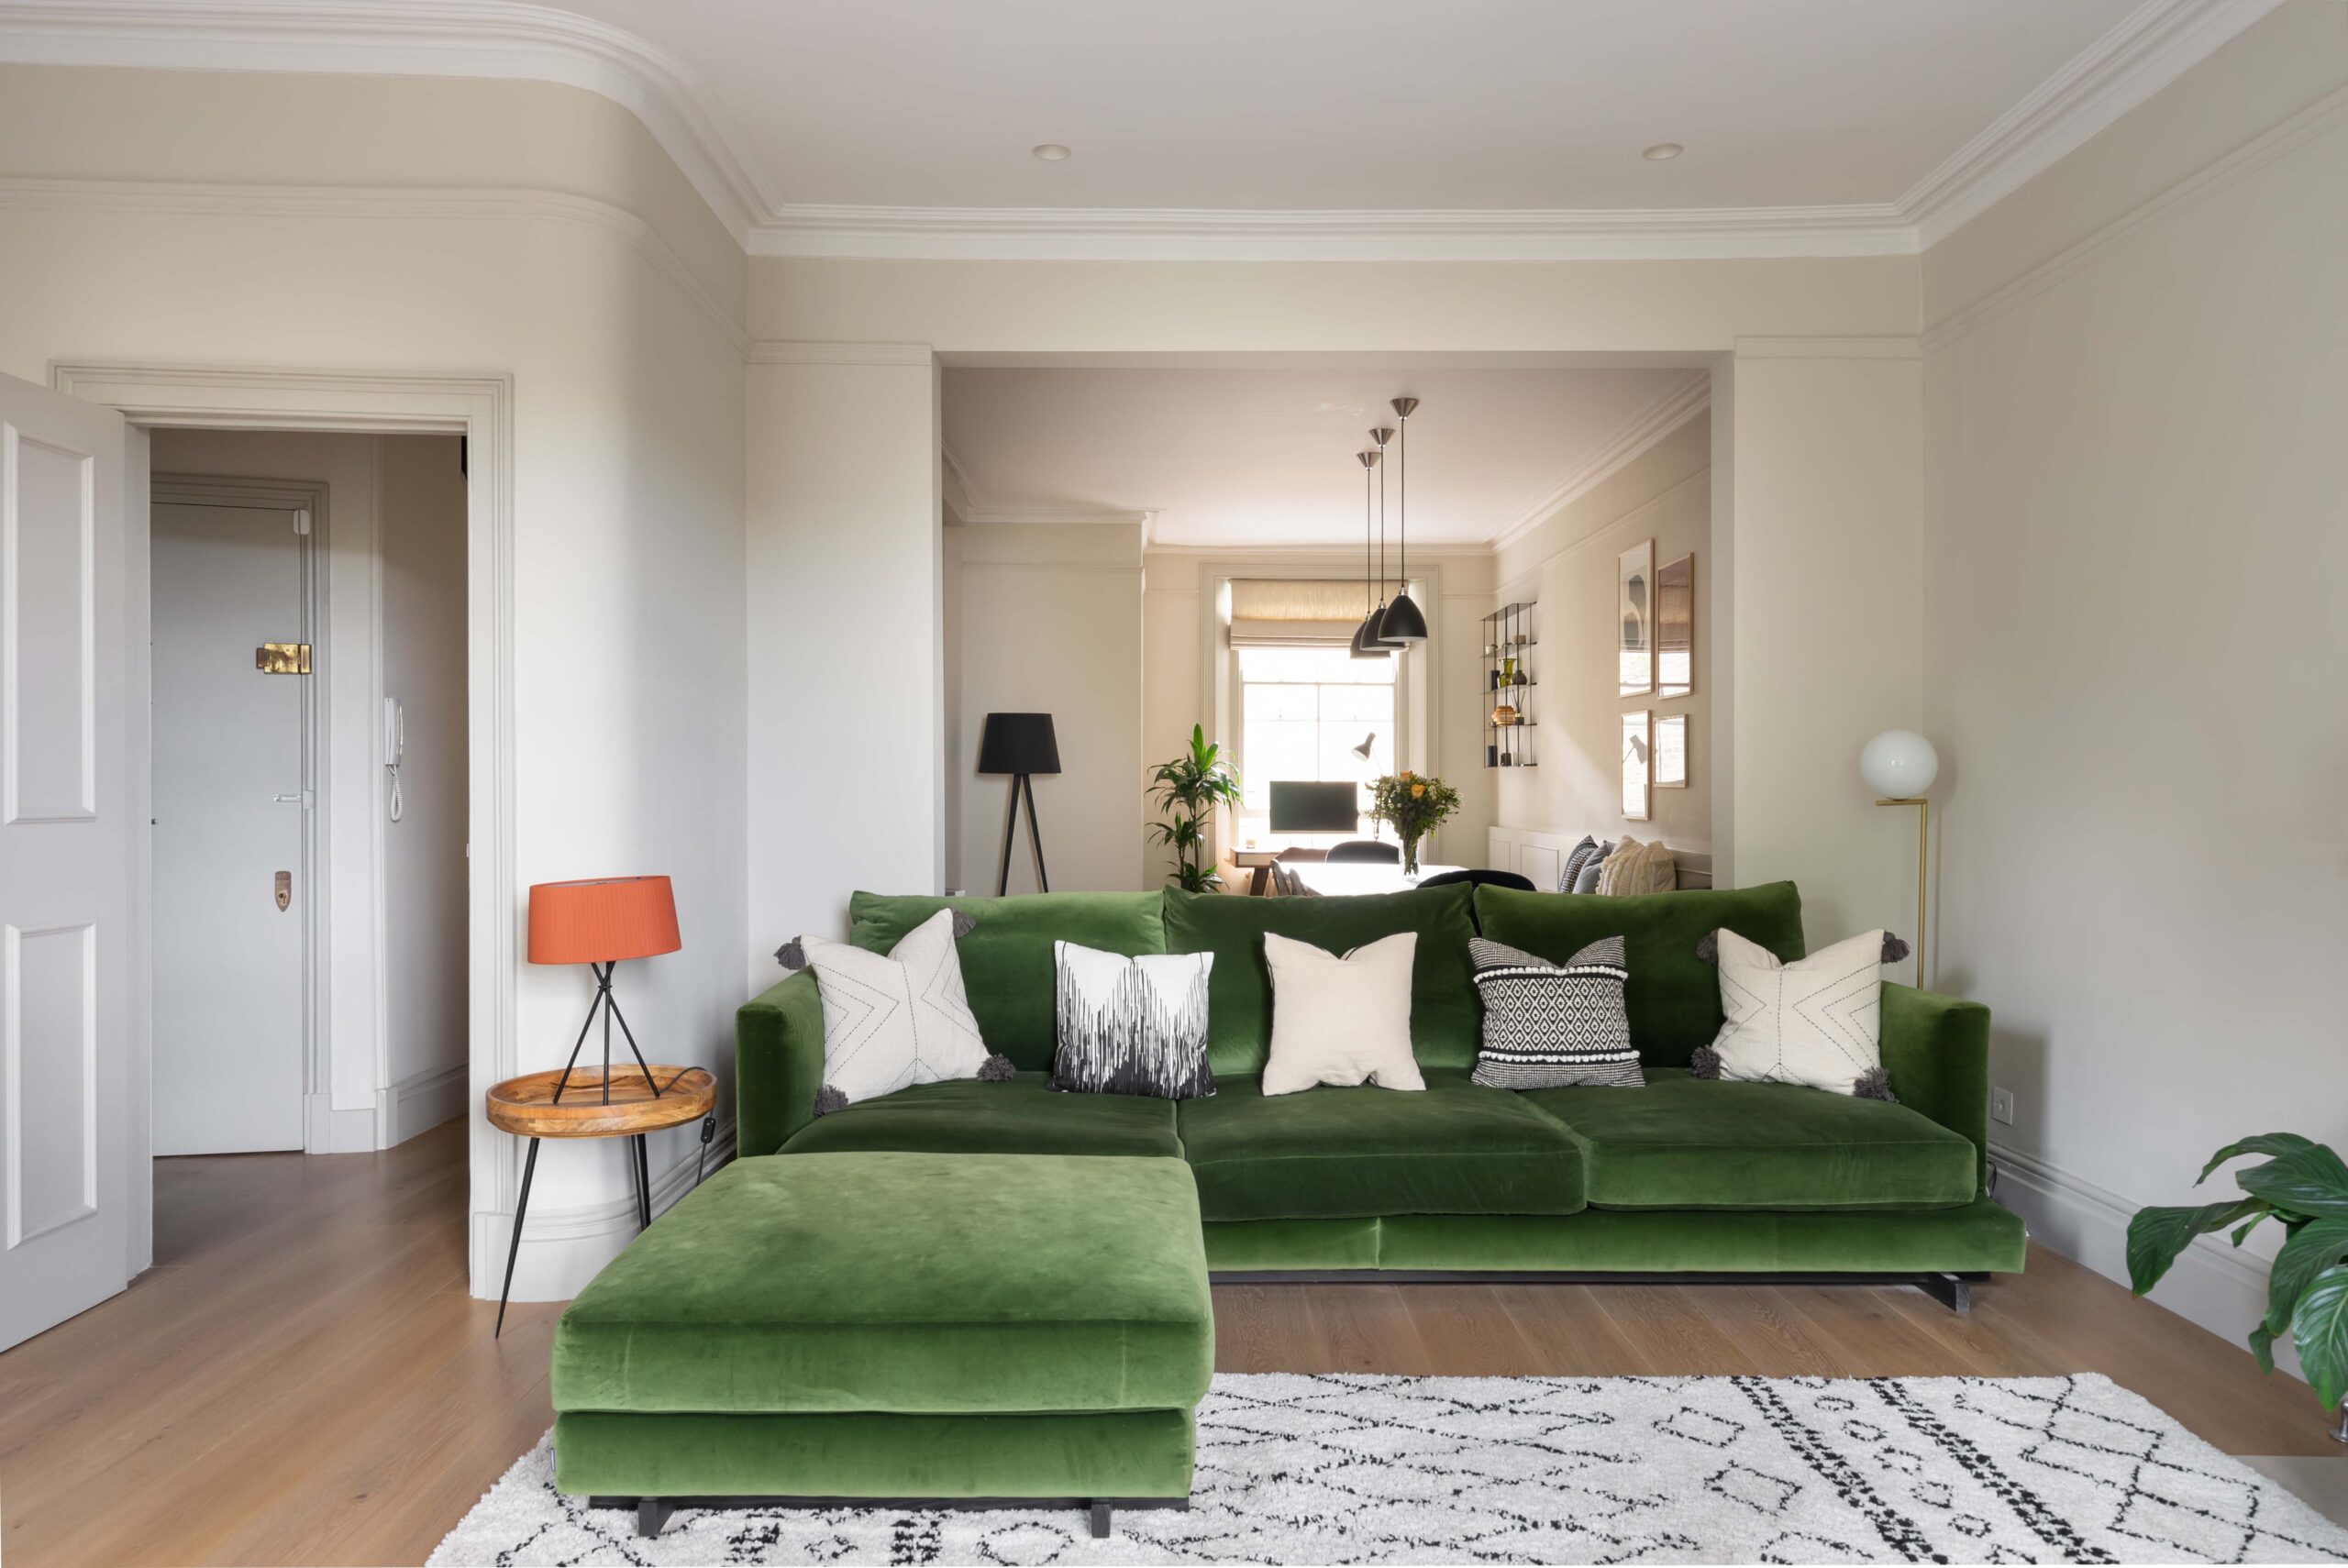 For Sale: Linden Gardens Notting Hill W11 De Rosee Sa modern interior design with green velvet sofas